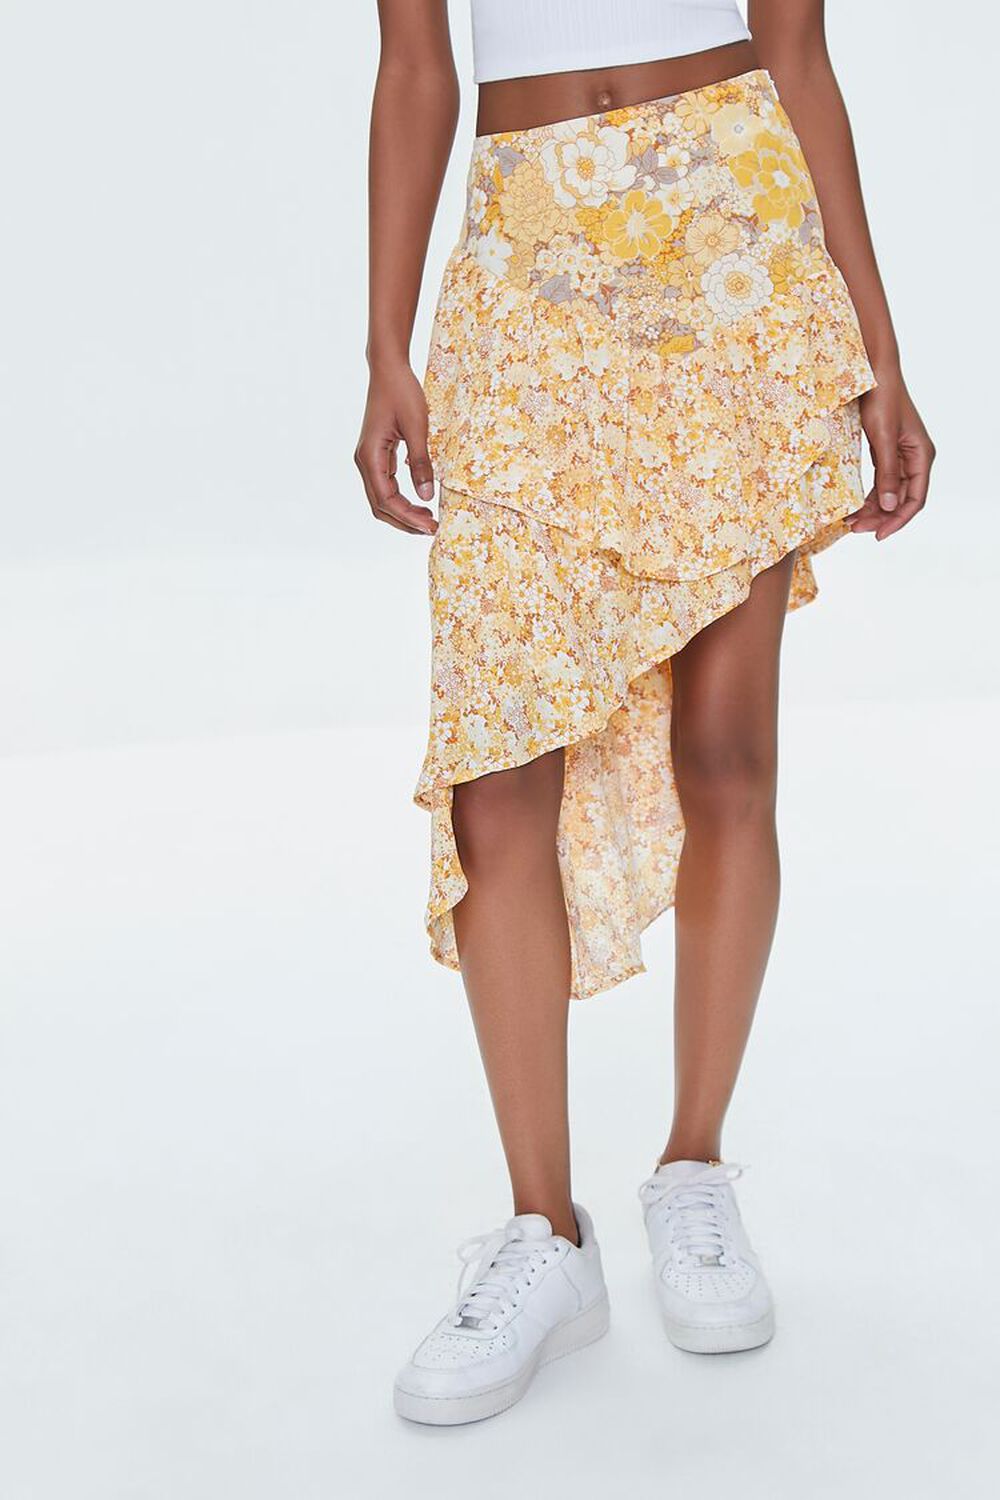 MUSTARD/MULTI Floral Print High-Low Skirt, image 2